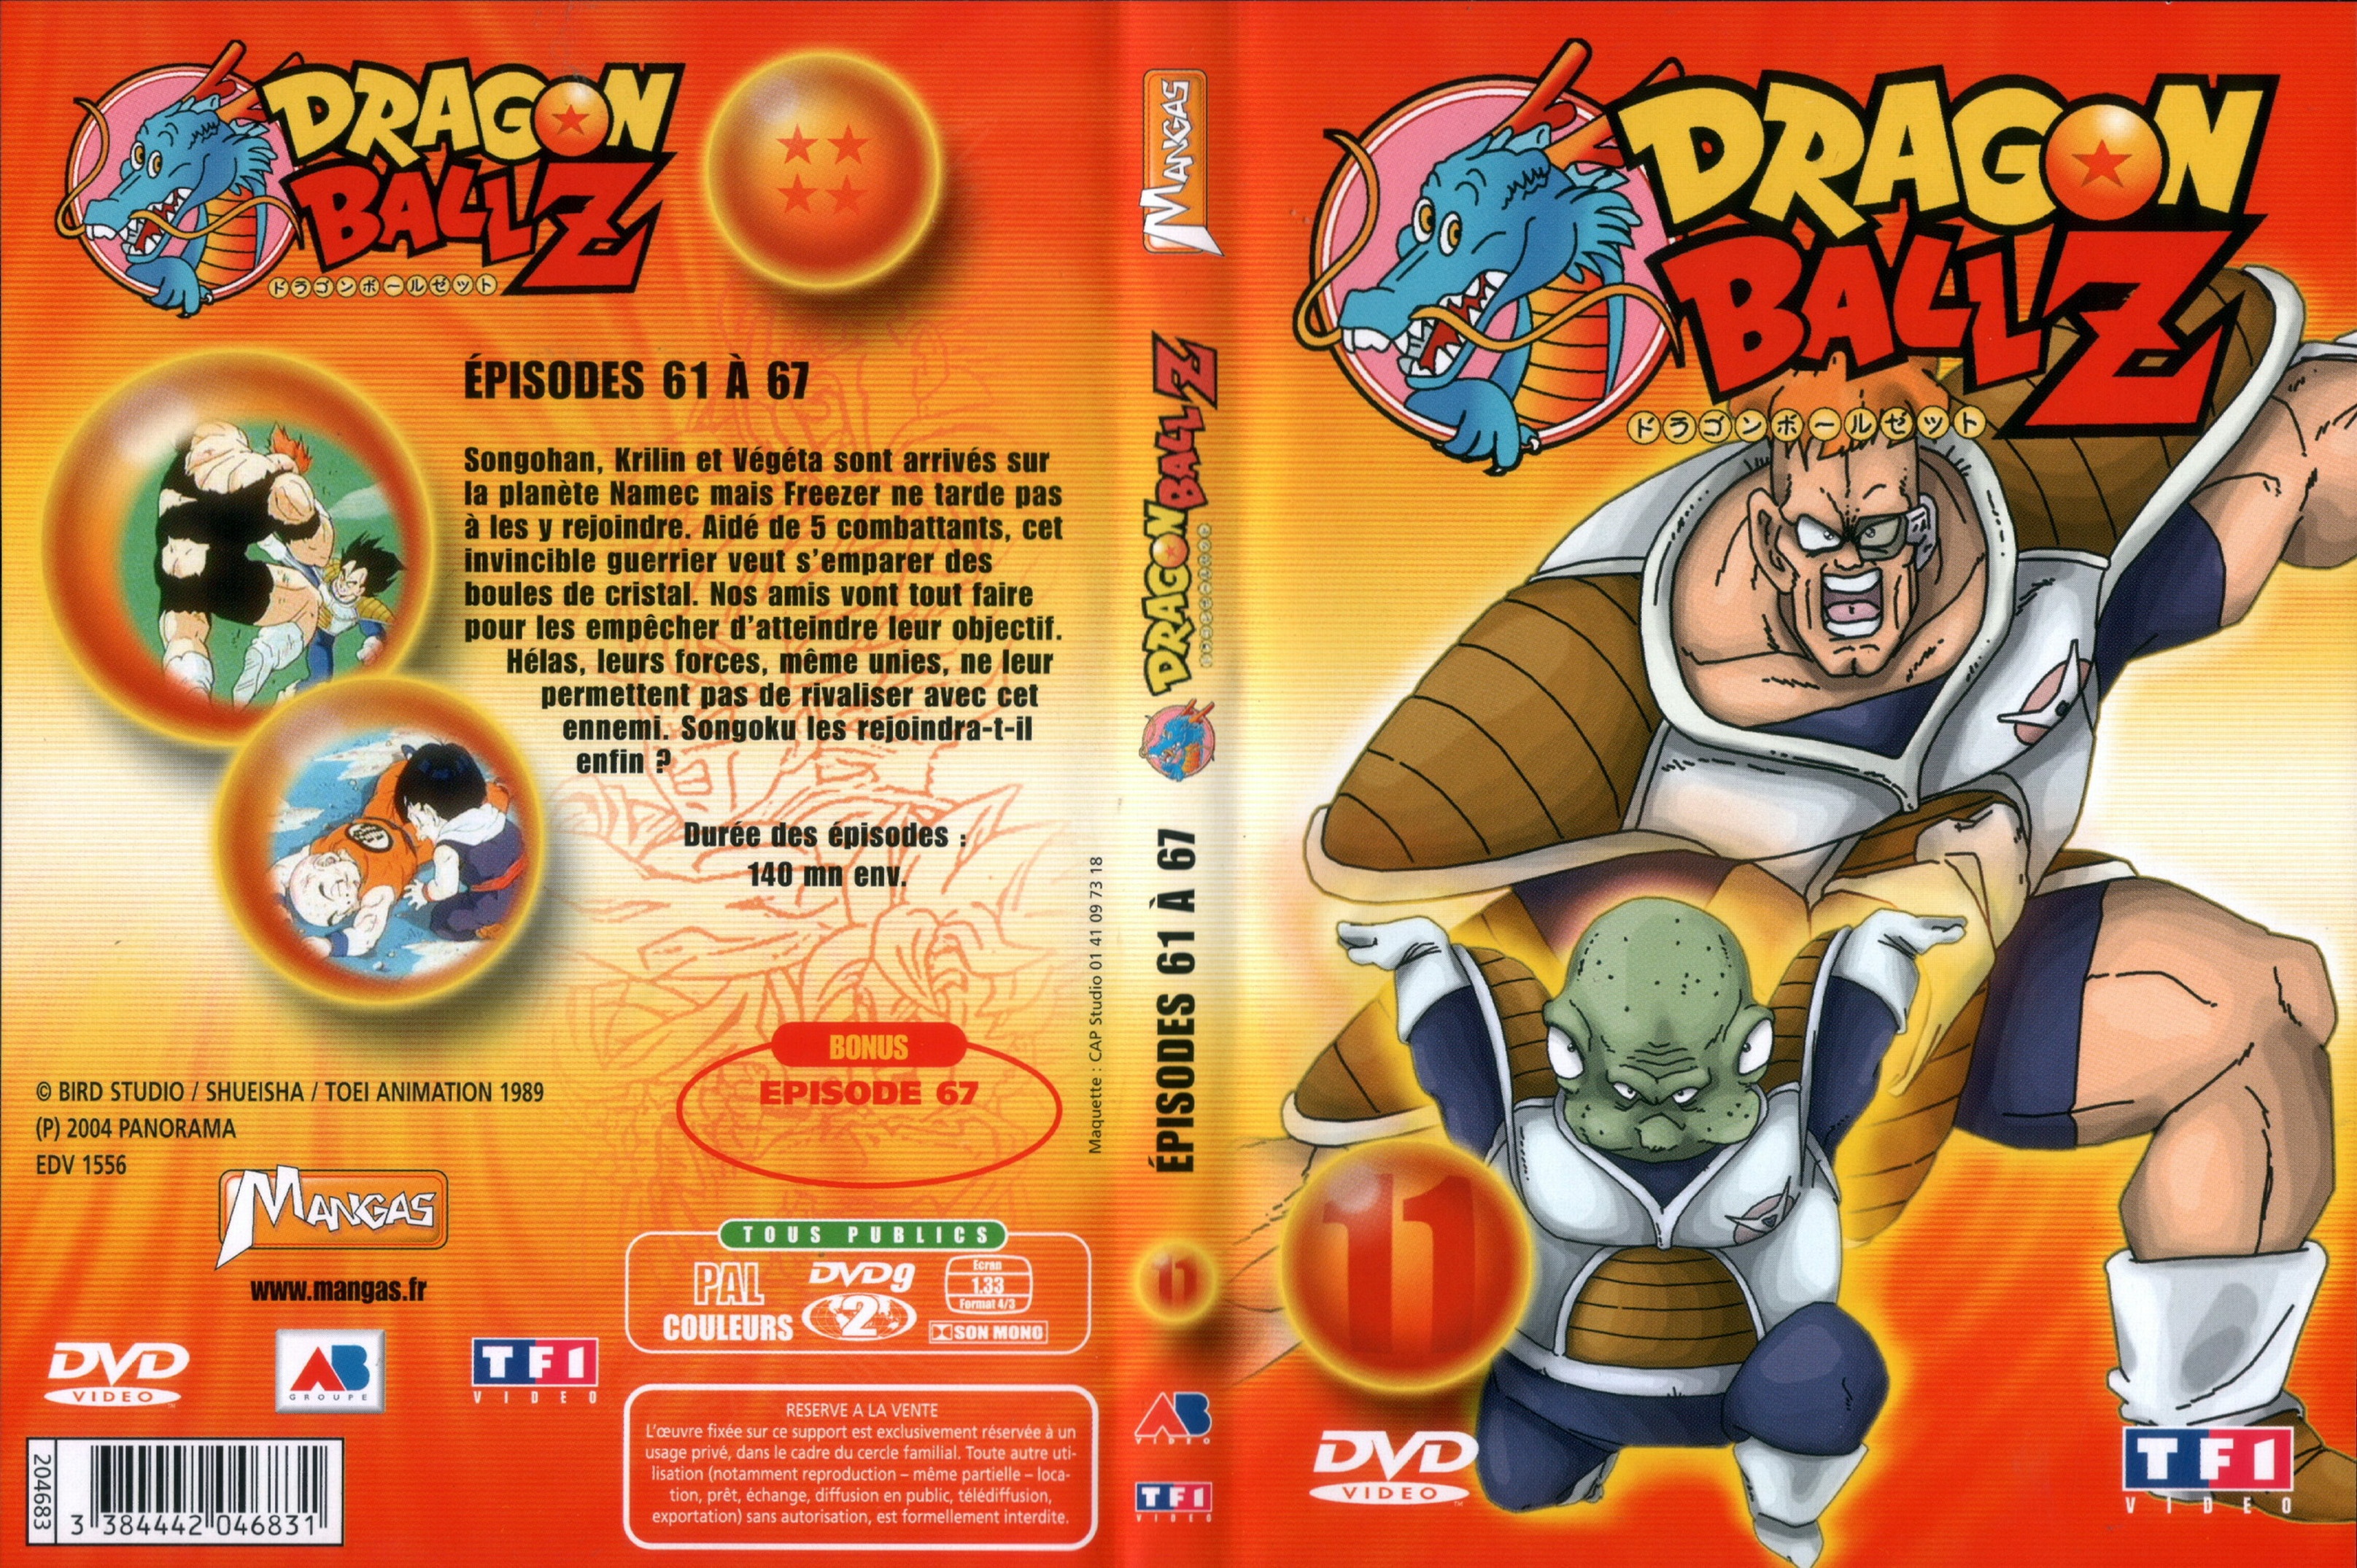 Jaquette DVD Dragon ball Z vol 11